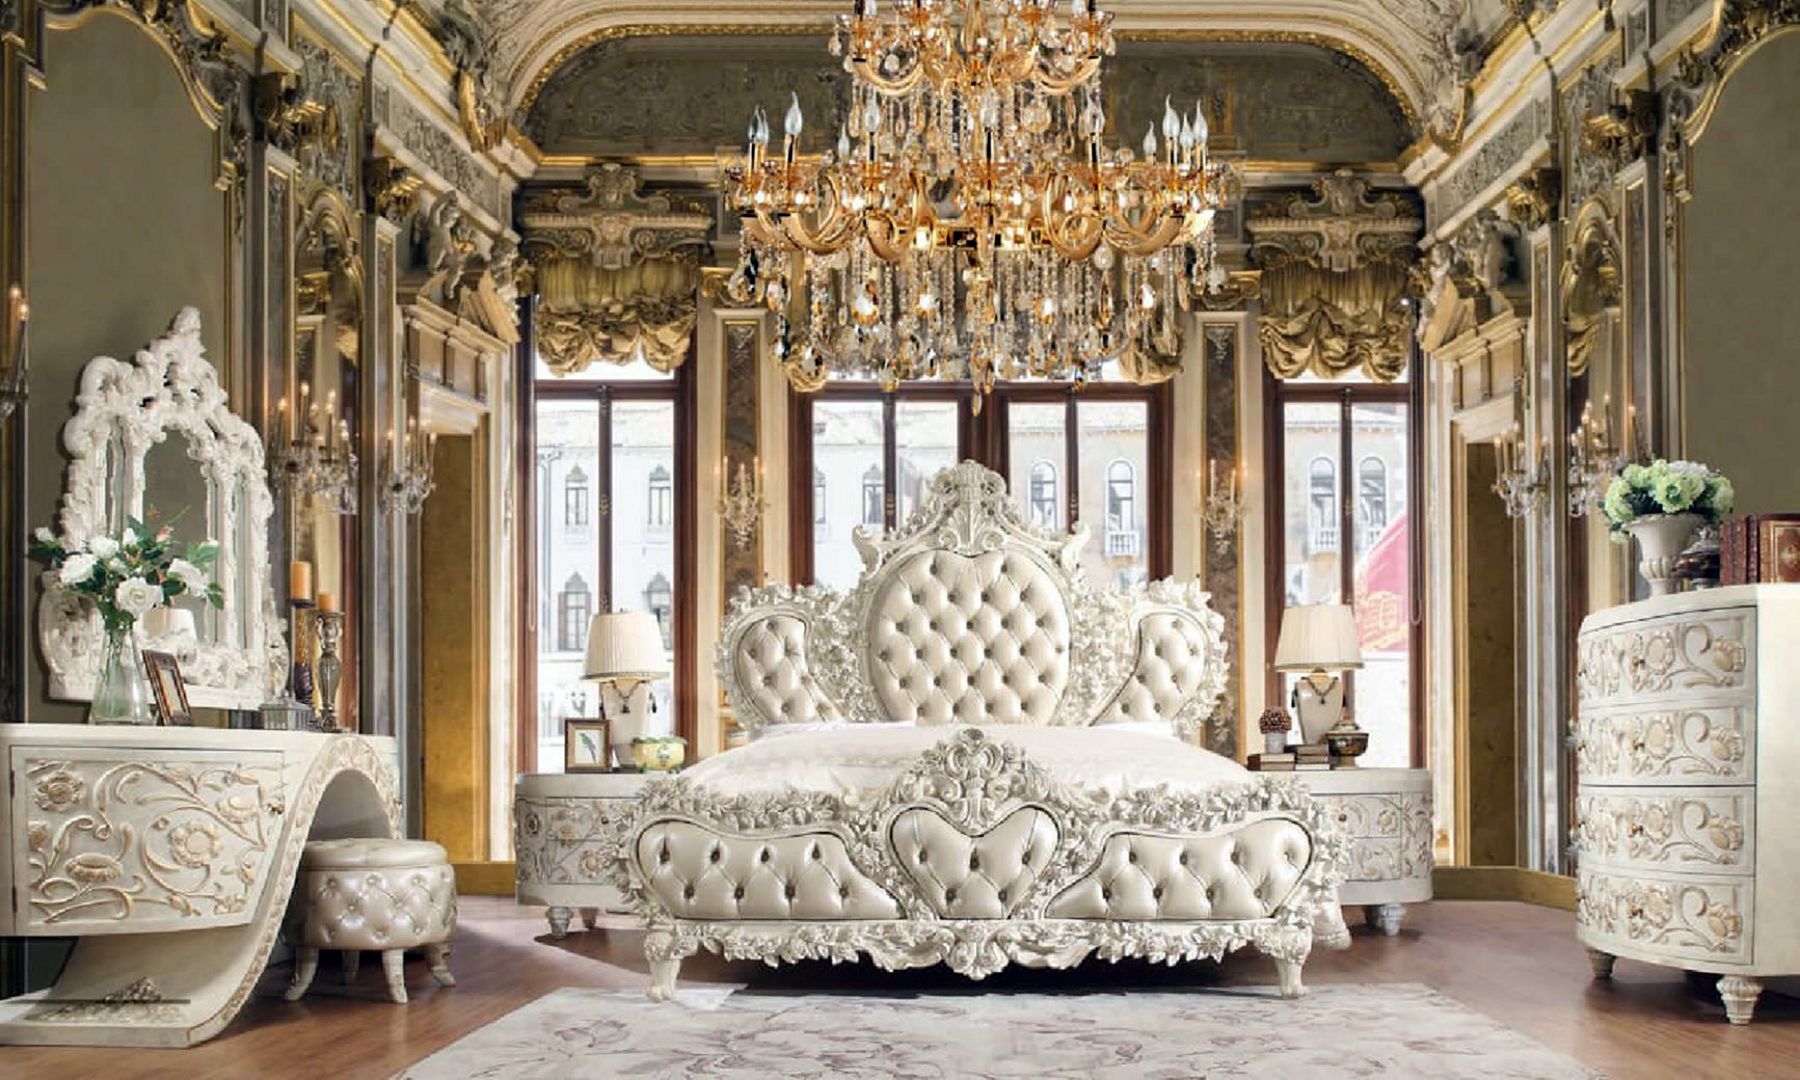 Baroque Belle Silver King Bedroom From Nyfurnitureoutlets